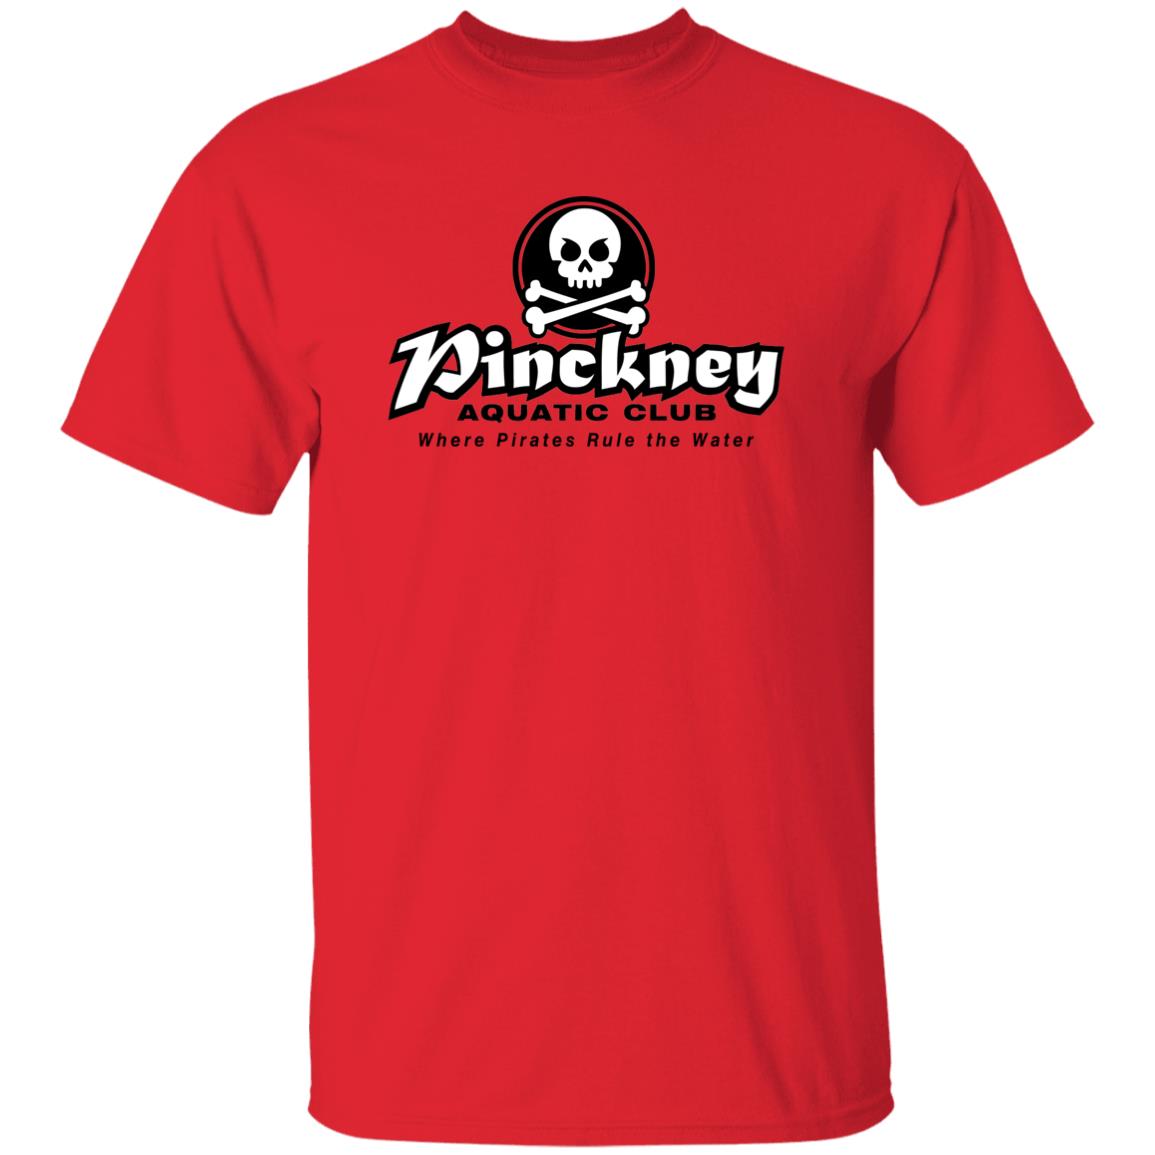 Pinckney Aquatic Club- B & W, G500B Youth 5.3 oz 100% Cotton T-Shirt